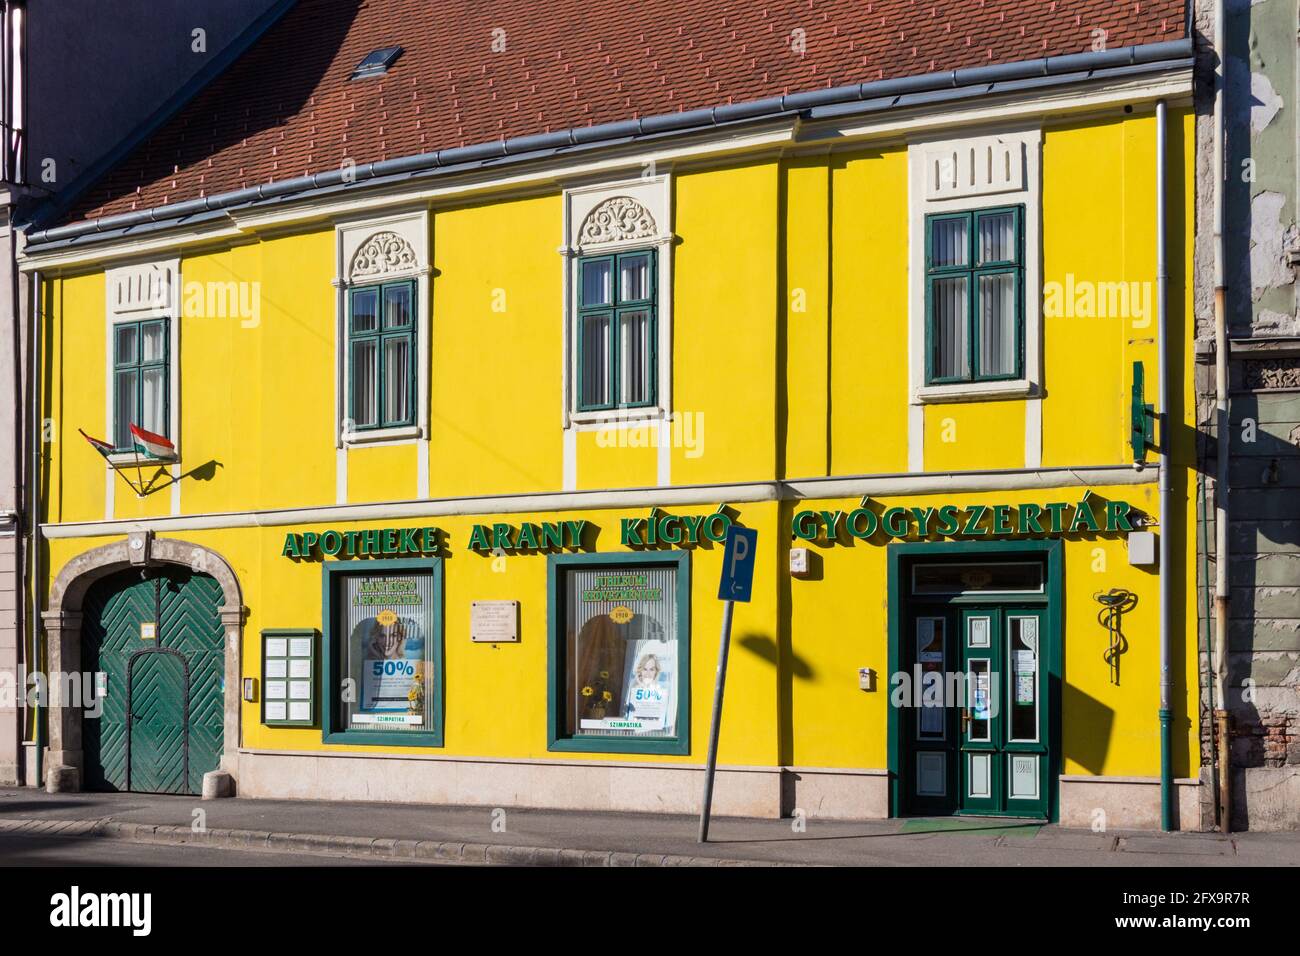 Bâtiment médiéval de l'Arany Kigyo Gyogyszertar (Golden Snake Pharmacy), Sopron, Hongrie Banque D'Images